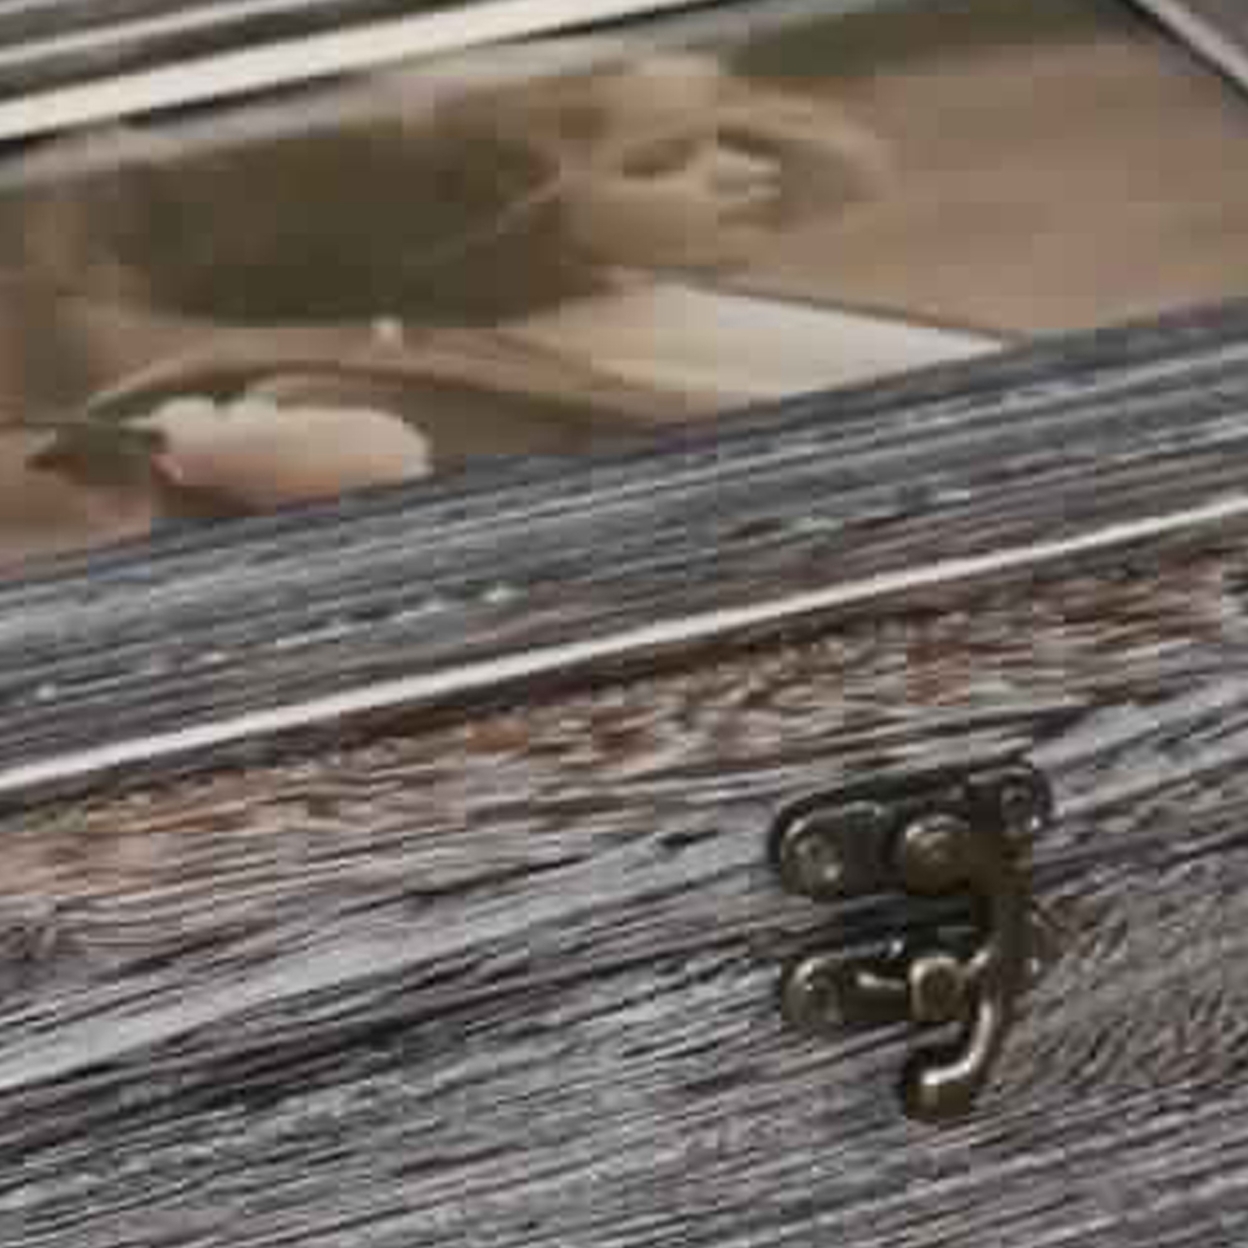 Molded Wooden Storage Box With Photo Frame Lid, Set Of 2, Gray- Saltoro Sherpi